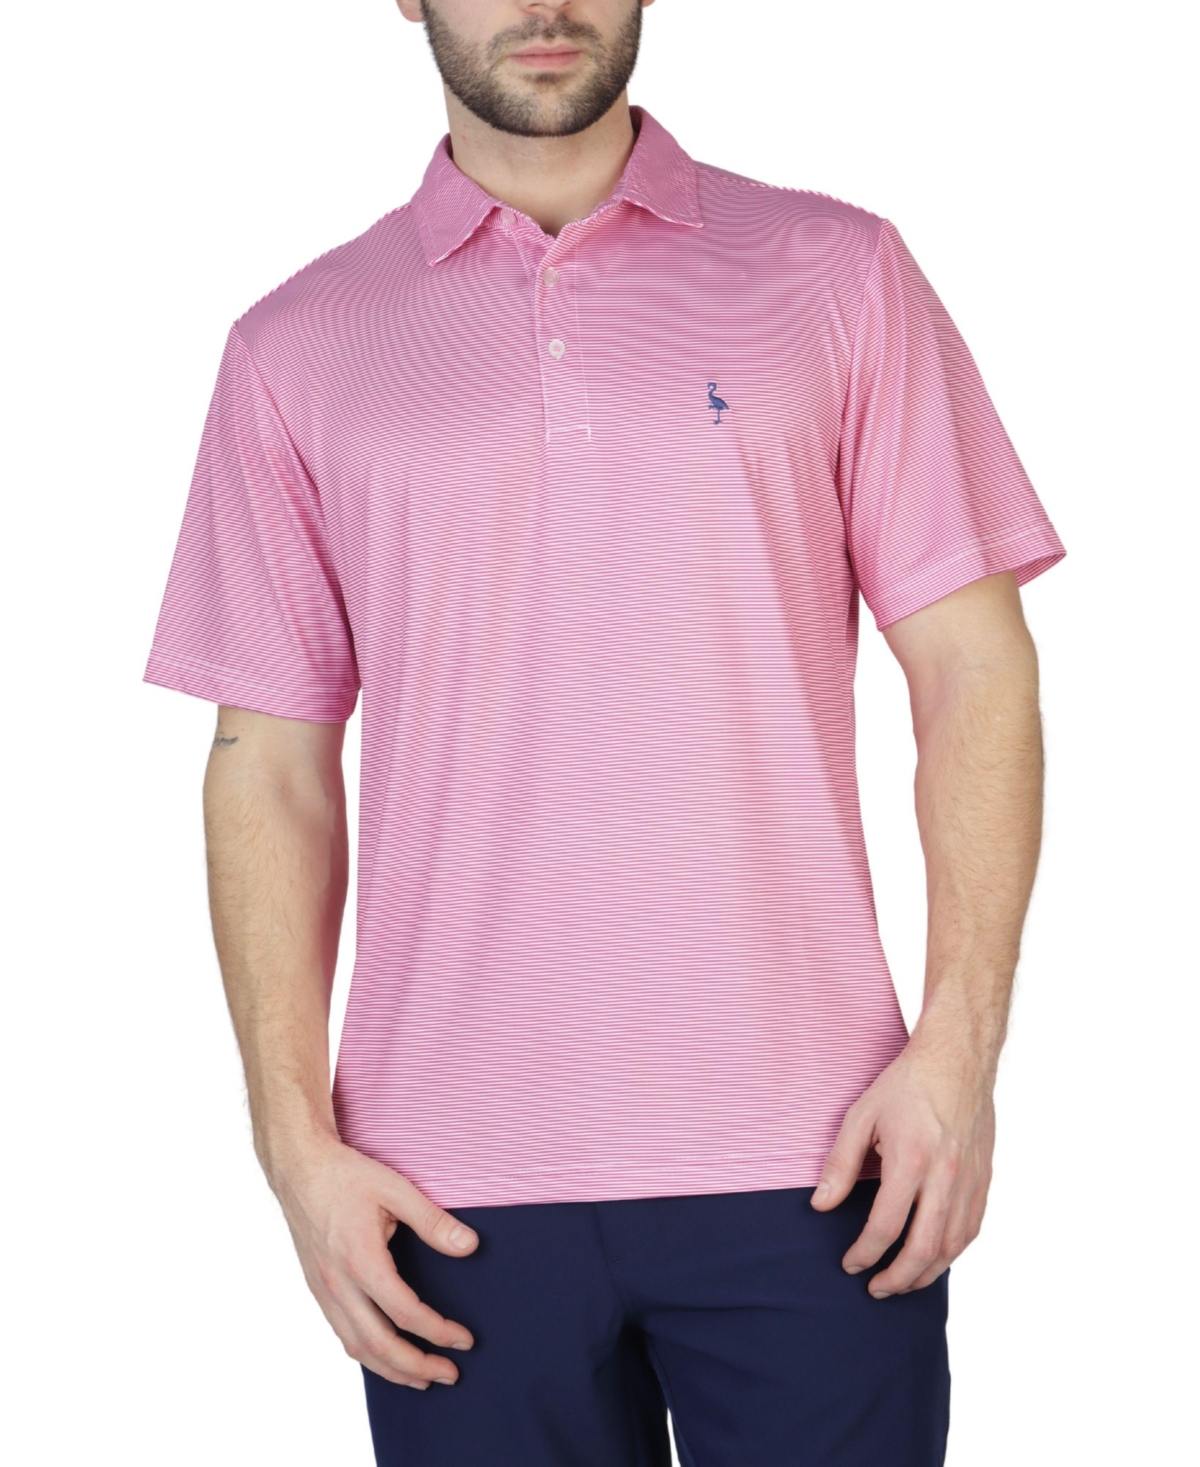 Stripes Performance Polo Shirt - Flamingo pink